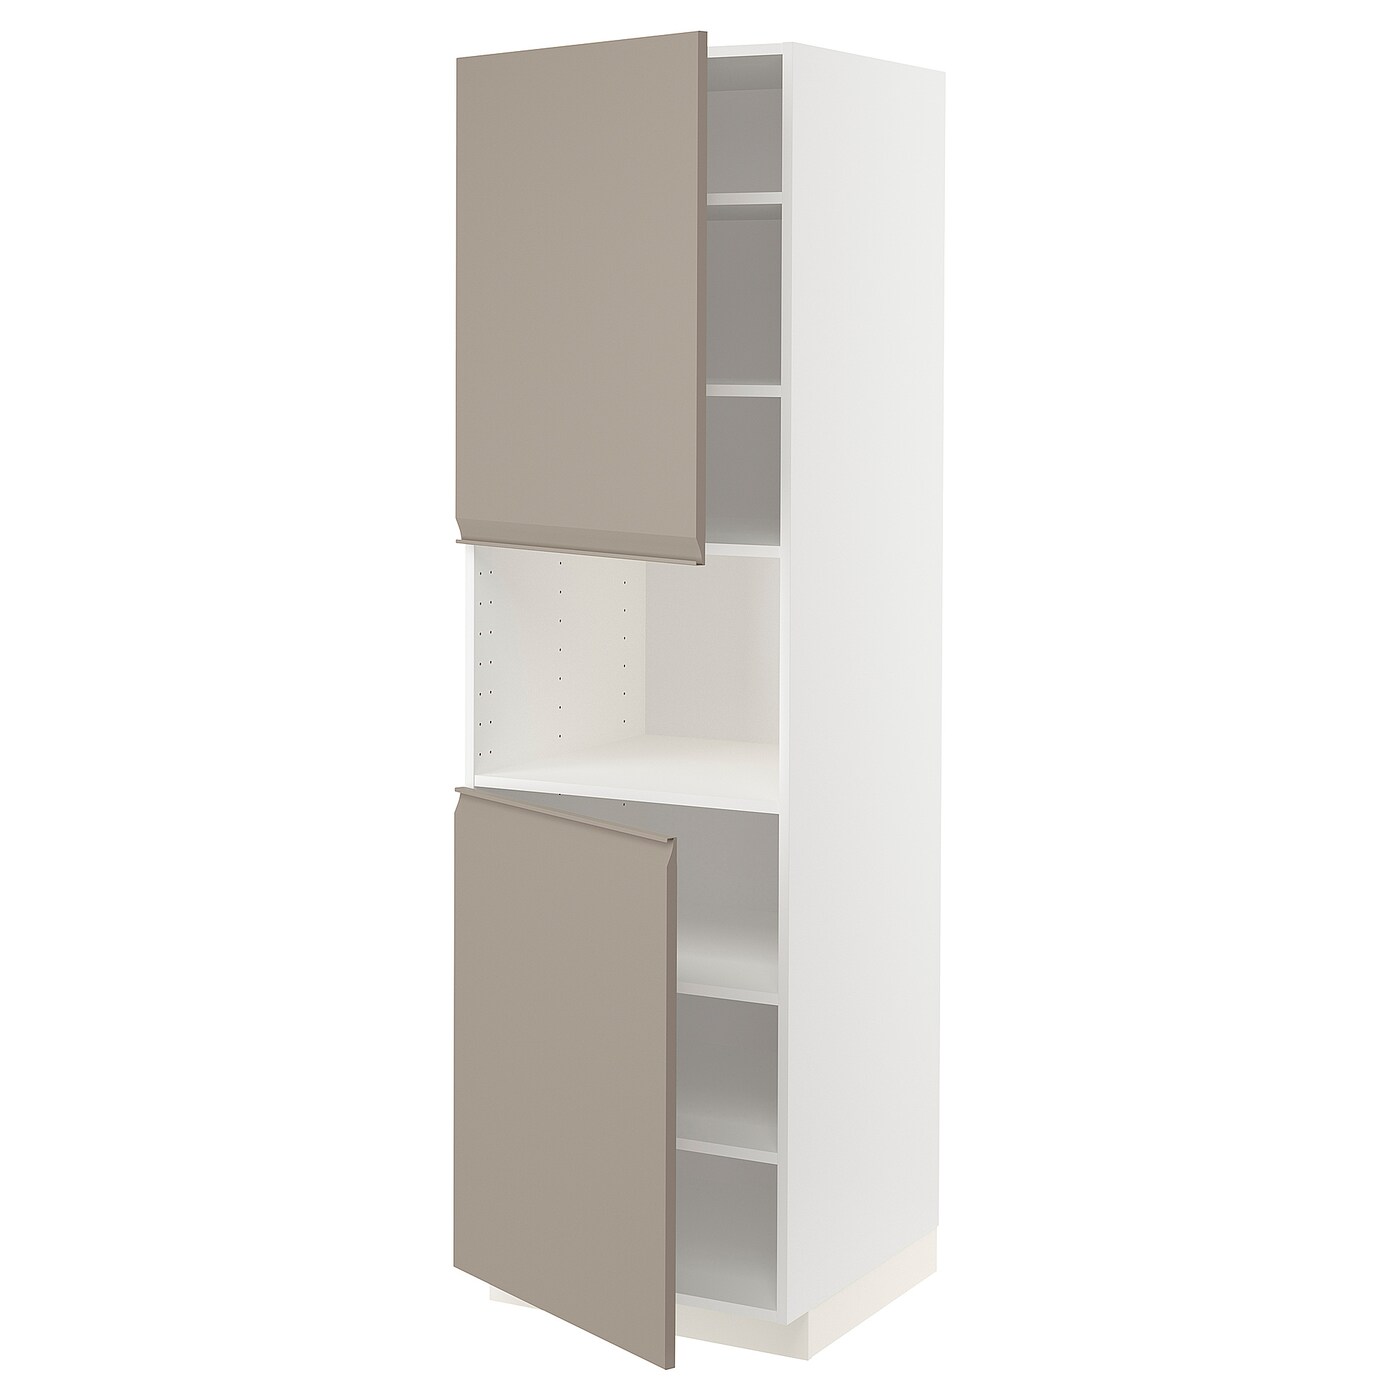 Высокий шкаф - IKEA METOD/МЕТОД ИКЕА, 200х60х60 см, белый/бежевый